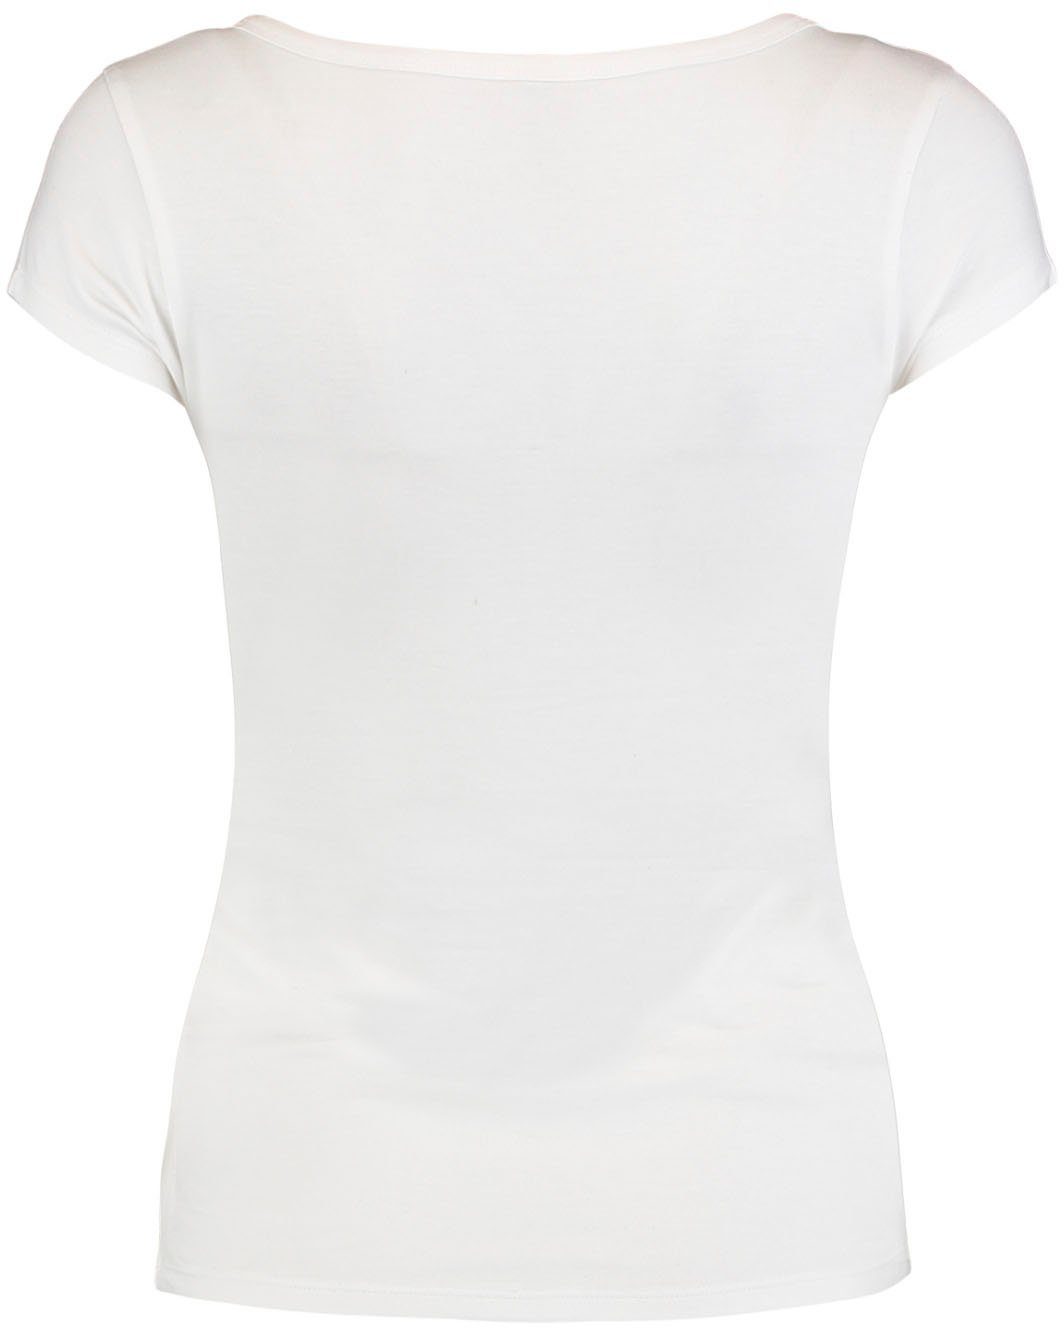 Henna T-Shirt TP white HaILY’S